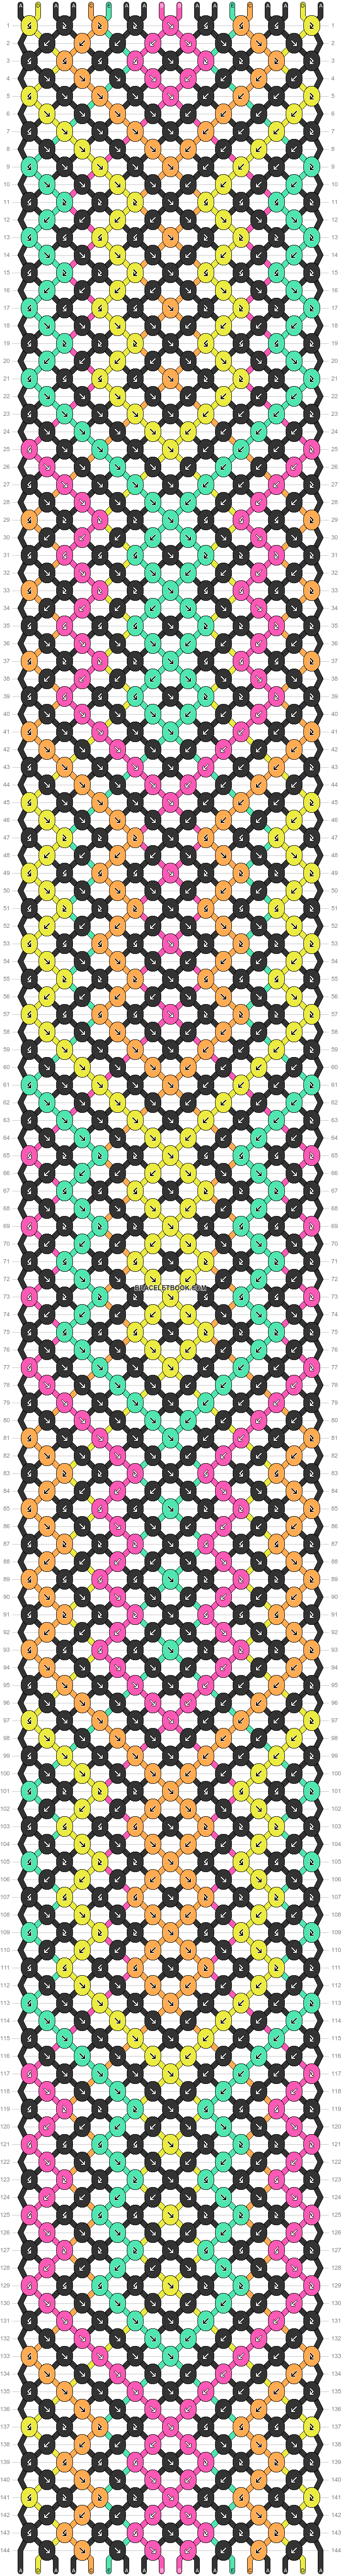 Normal pattern #56509 | BraceletBook